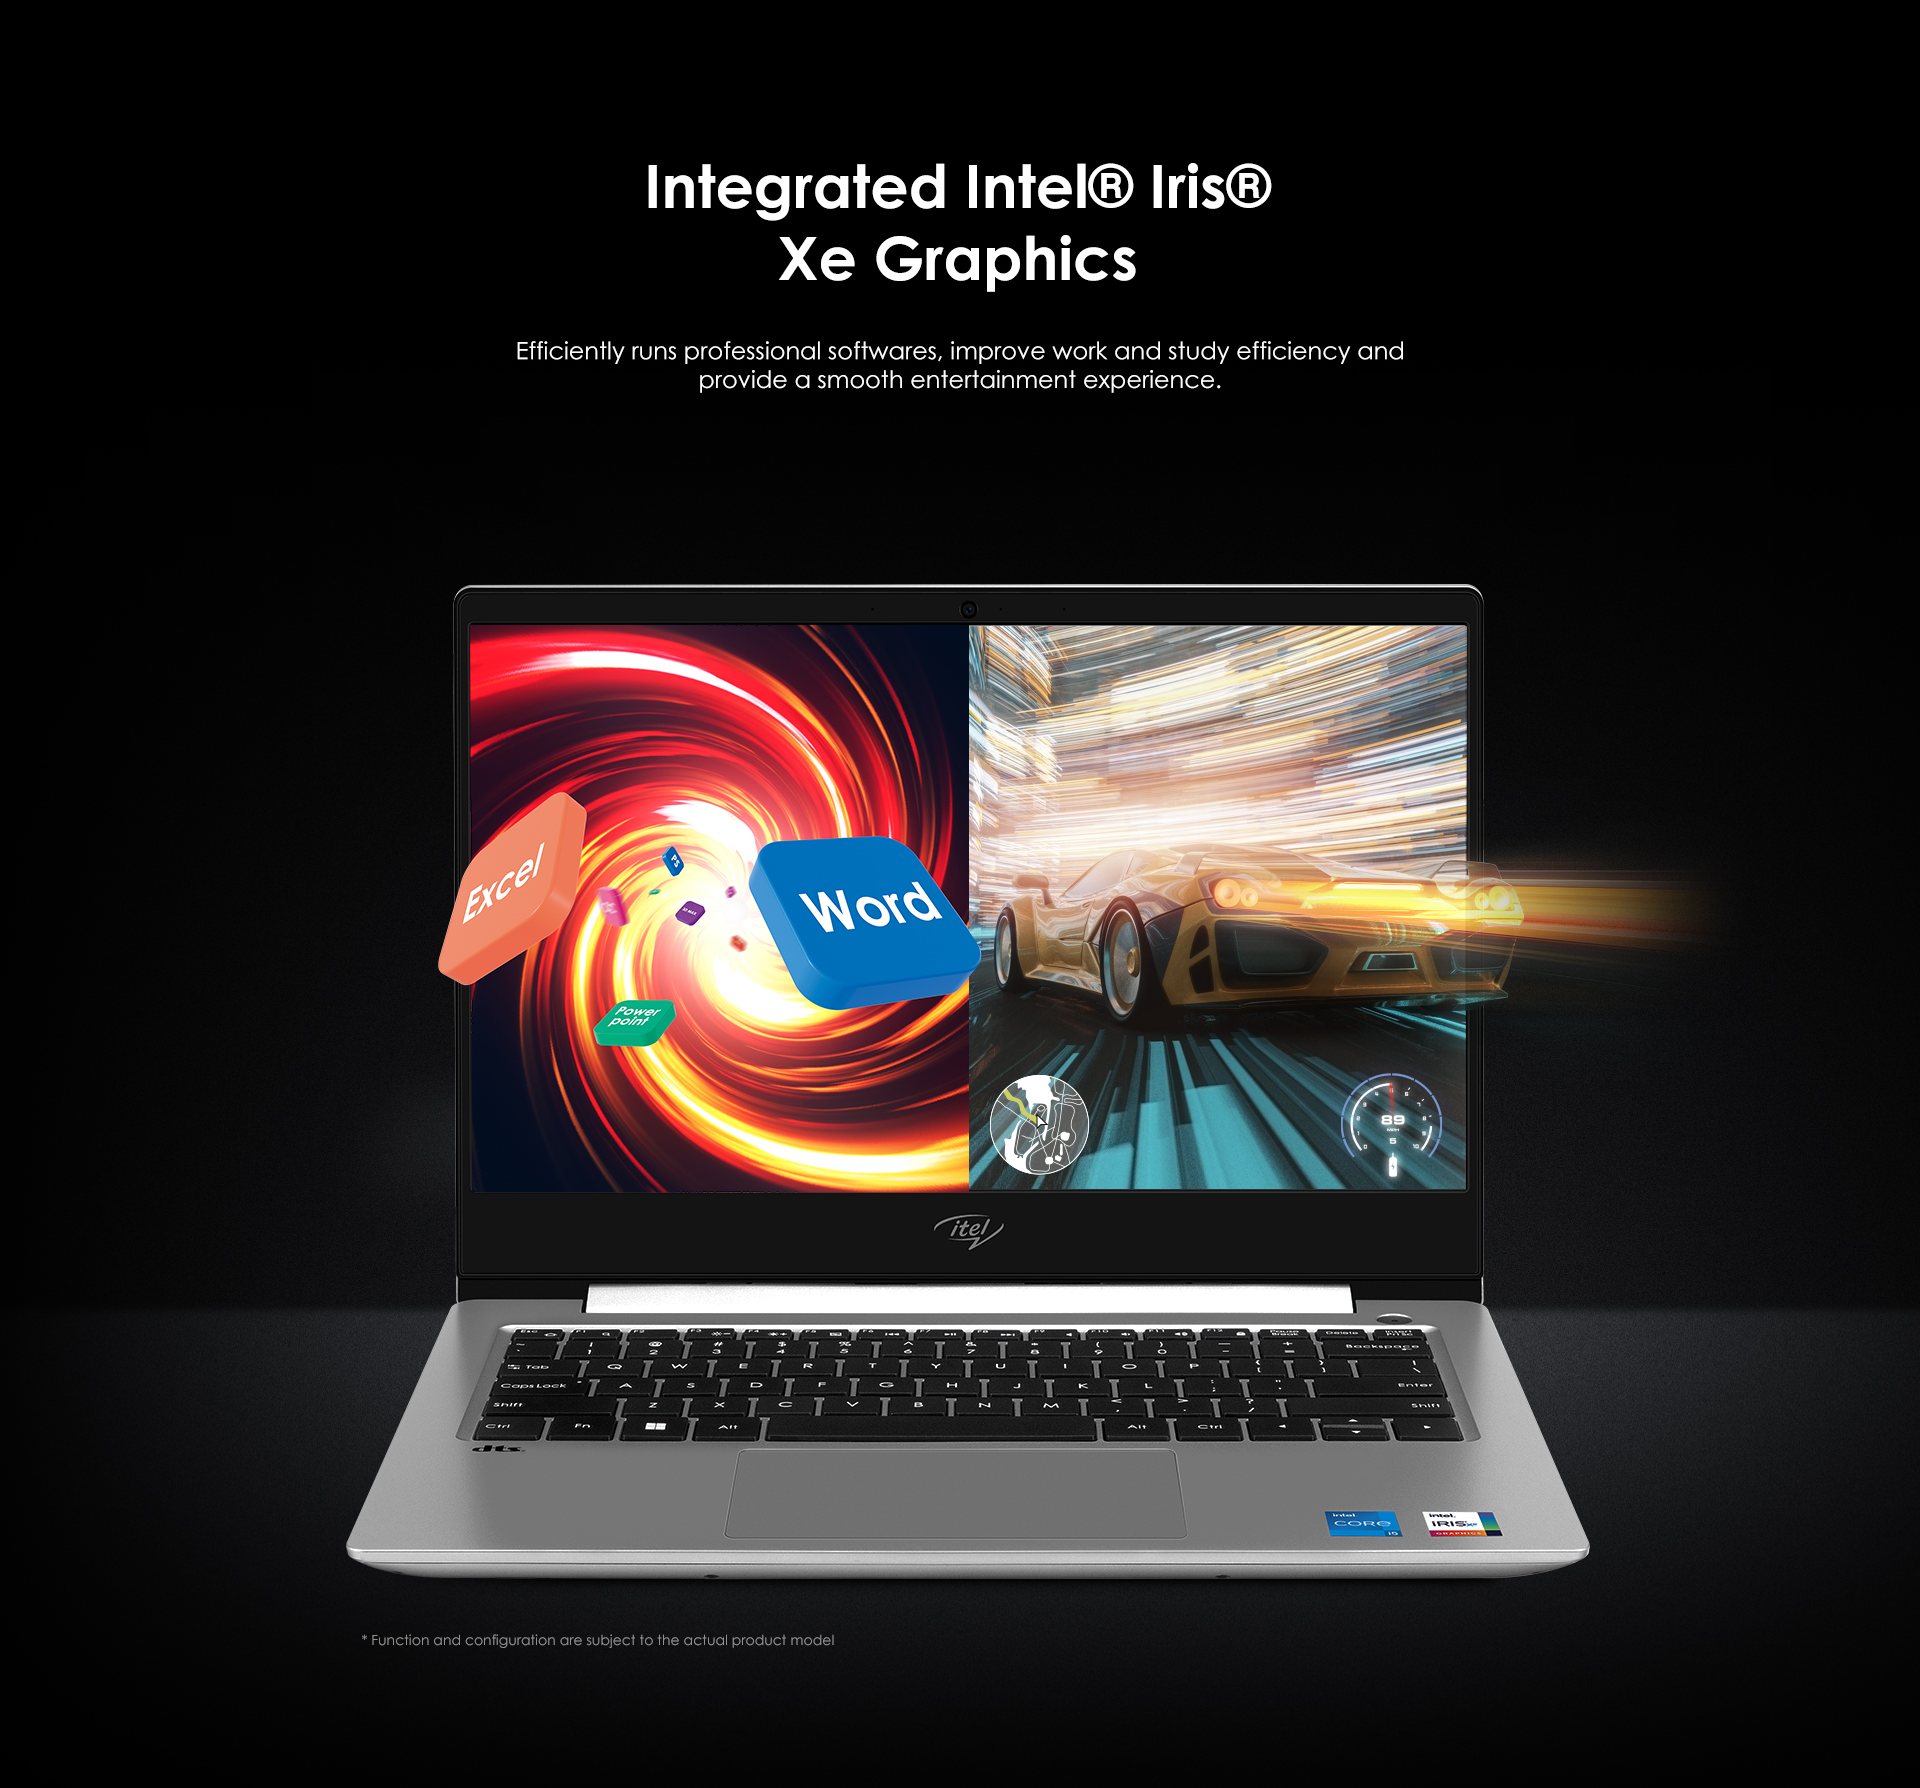 Test PC portable Apple – LaptopSpirit